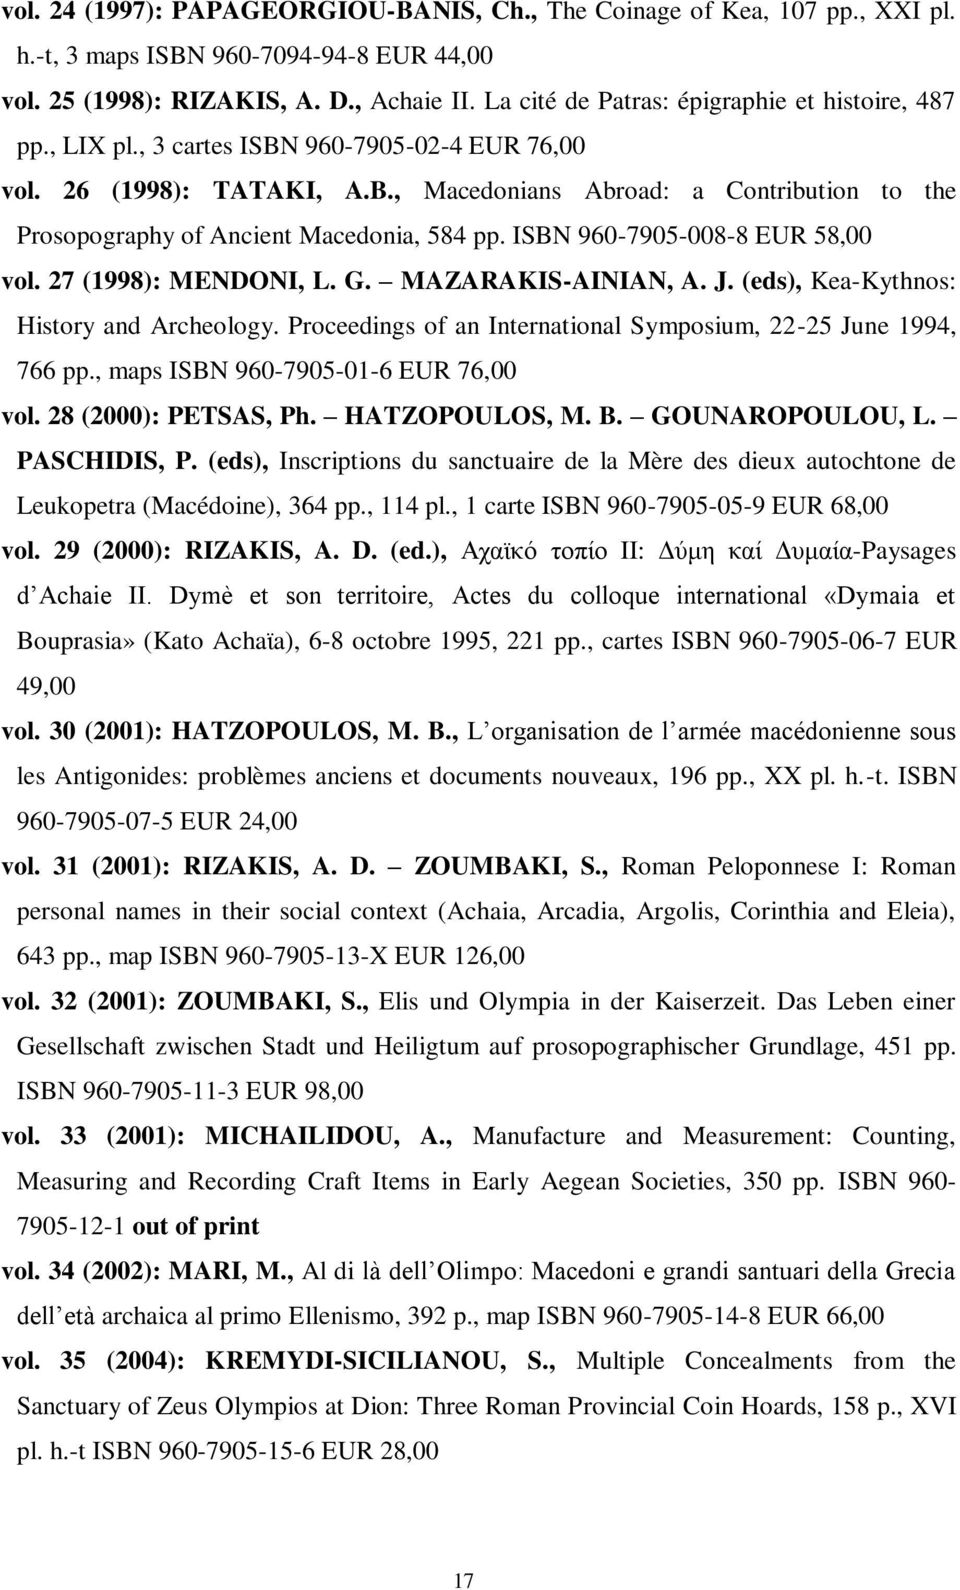 ISBN 960-7905-008-8 EUR 58,00 vol. 27 (1998): MENDONI, L. G. MAZARAKIS-AINIAN, A. J. (eds), Kea-Kythnos: History and Archeology. Proceedings of an International Symposium, 22-25 June 1994, 766 pp.